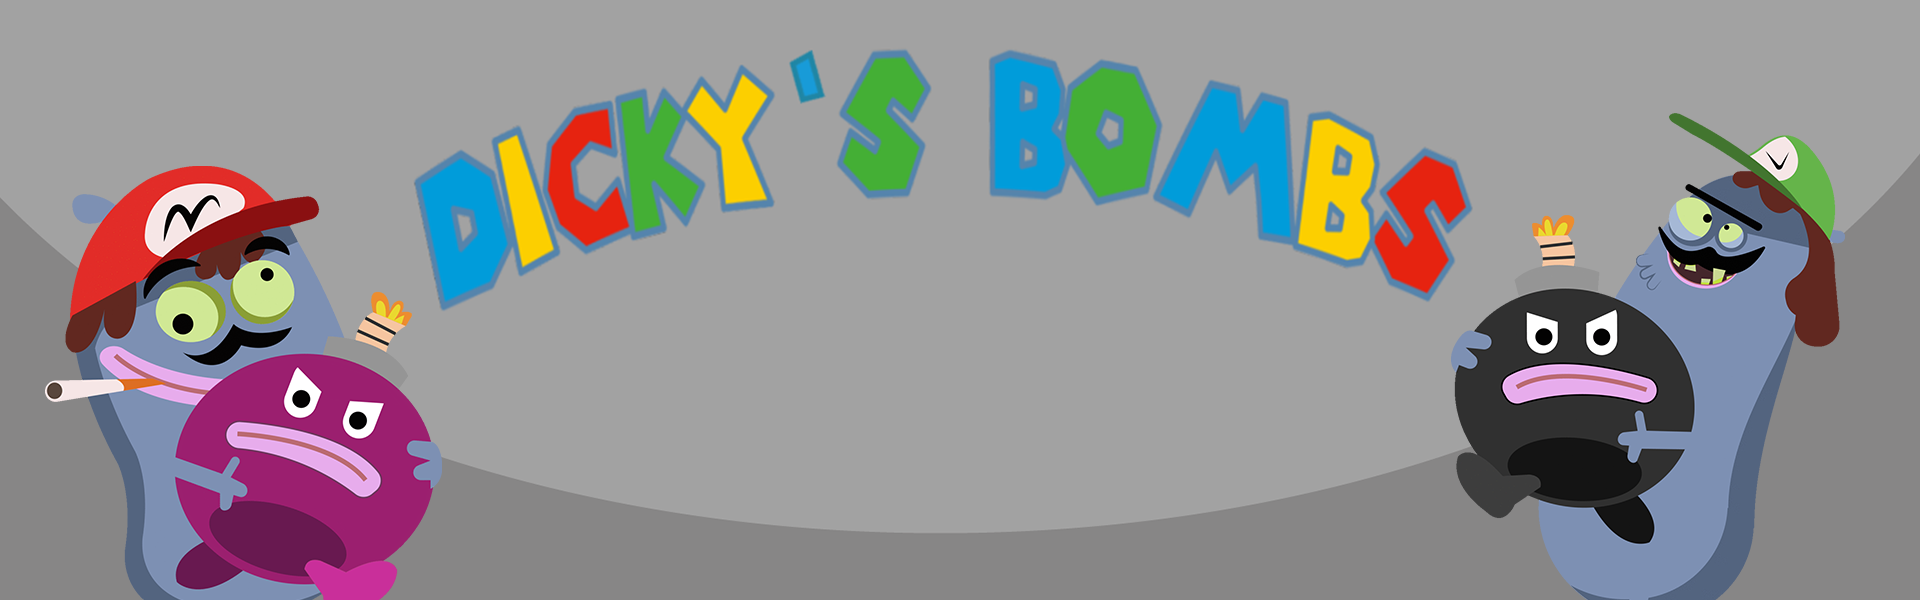 Dicky's Bombs